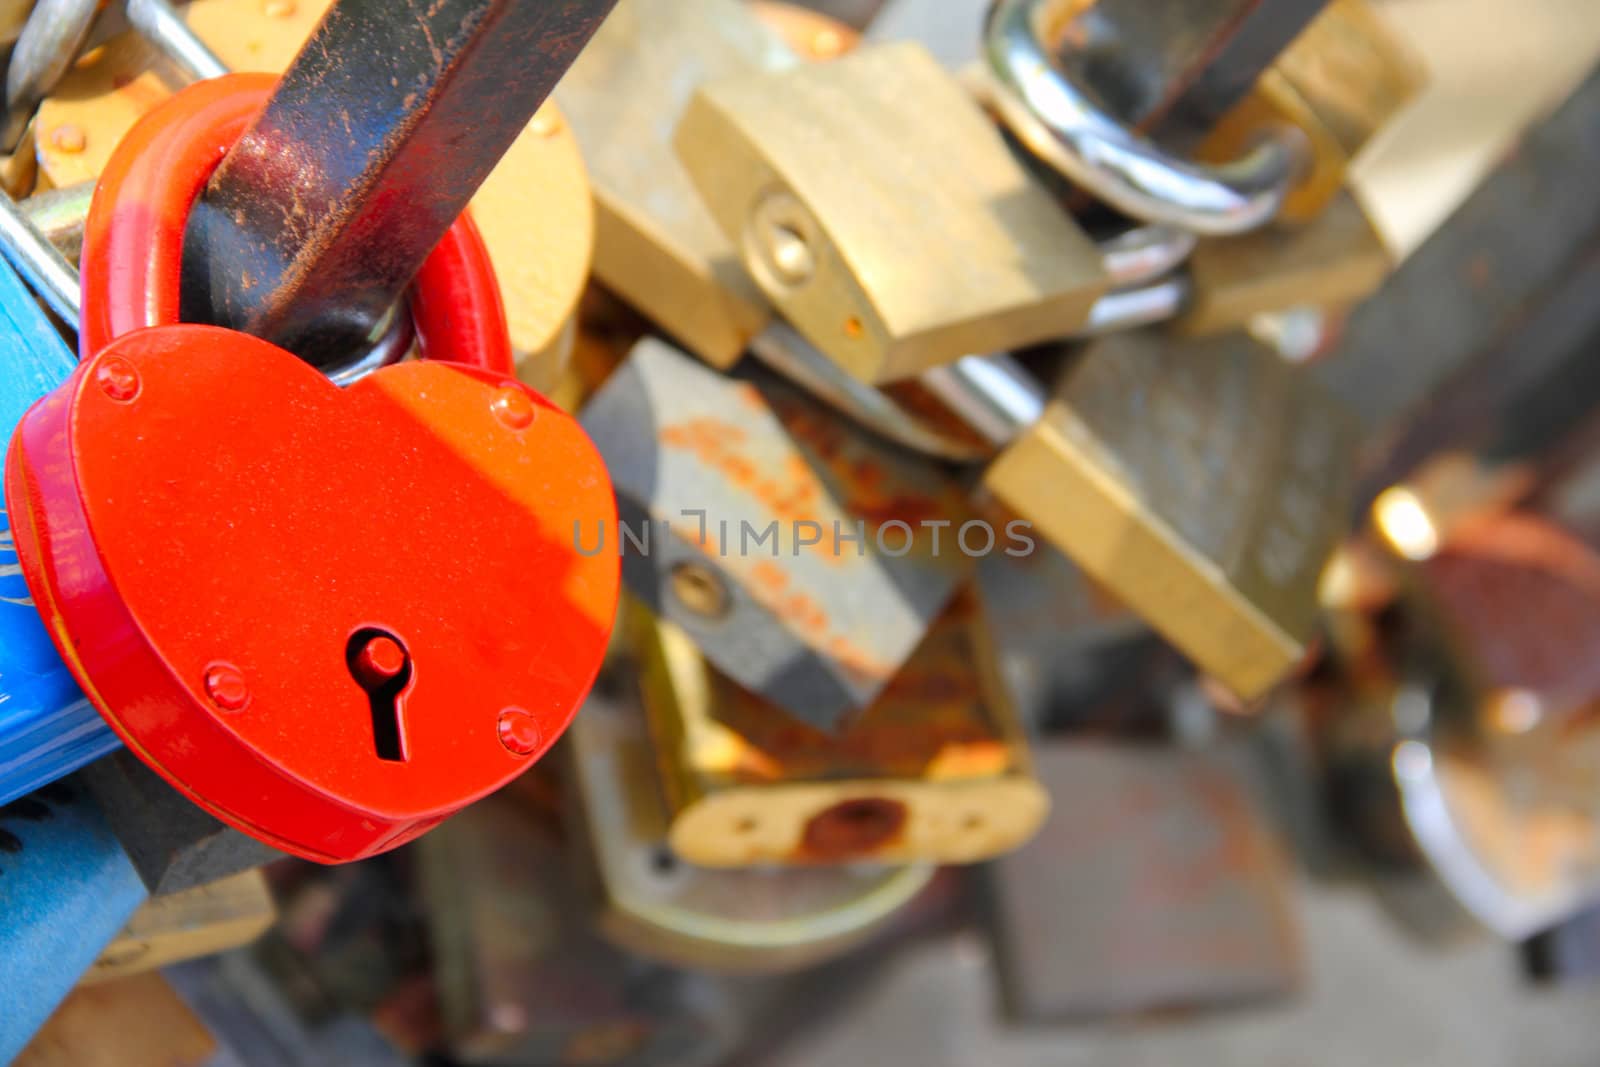 Many marriage love symbol padlocks chained on bridge